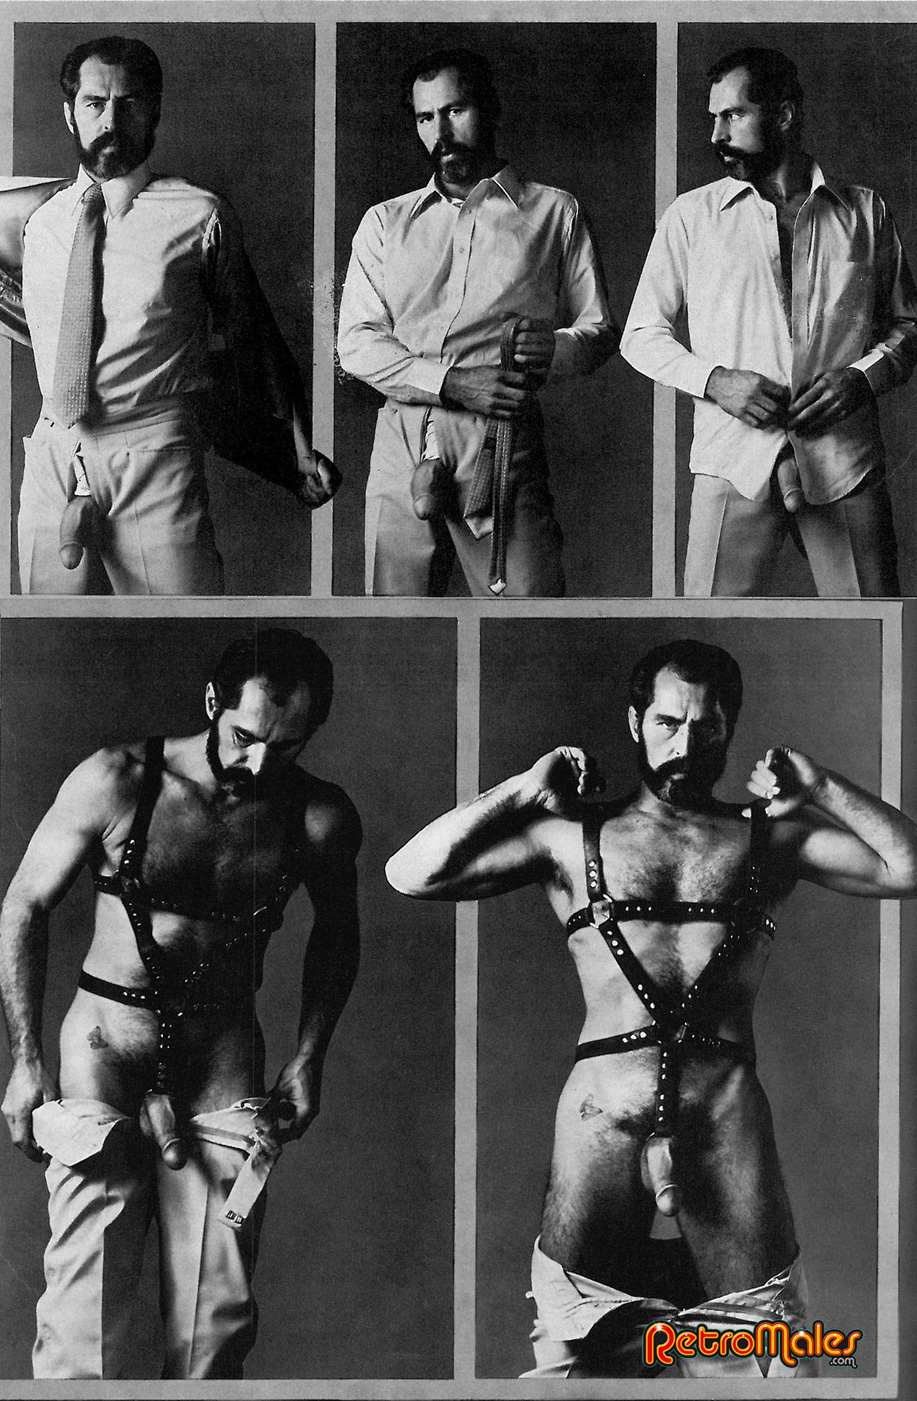 Vintage gay porn with Richard Locke | MetalbondNYC.com